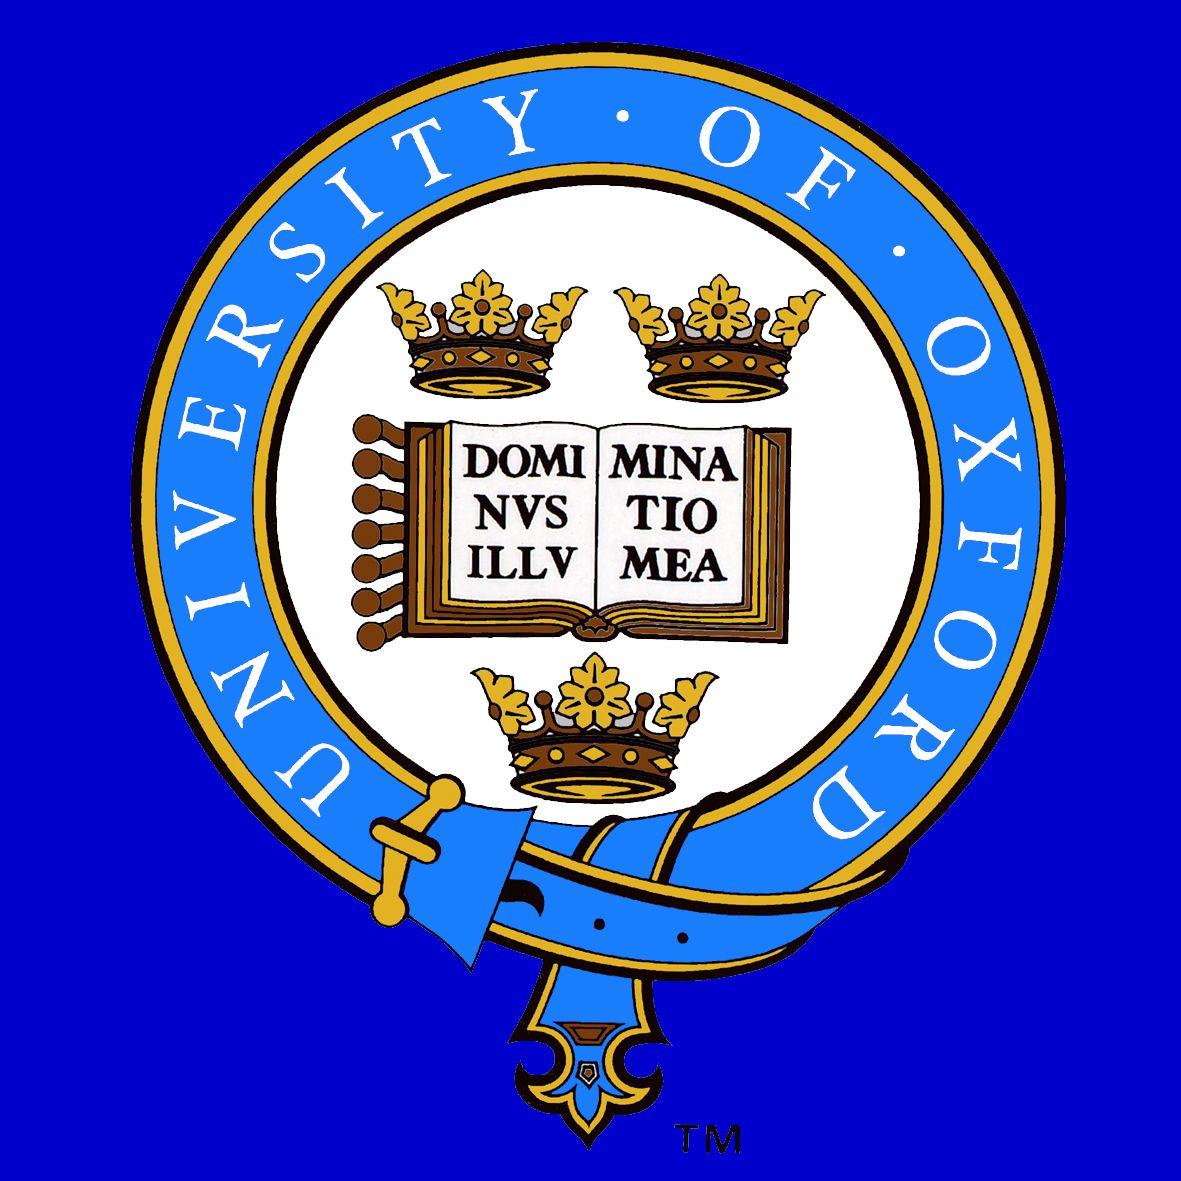 Universityofoxford Logo - University Of Oxford Logo. D Model: StickerCa 010236. Other Famous